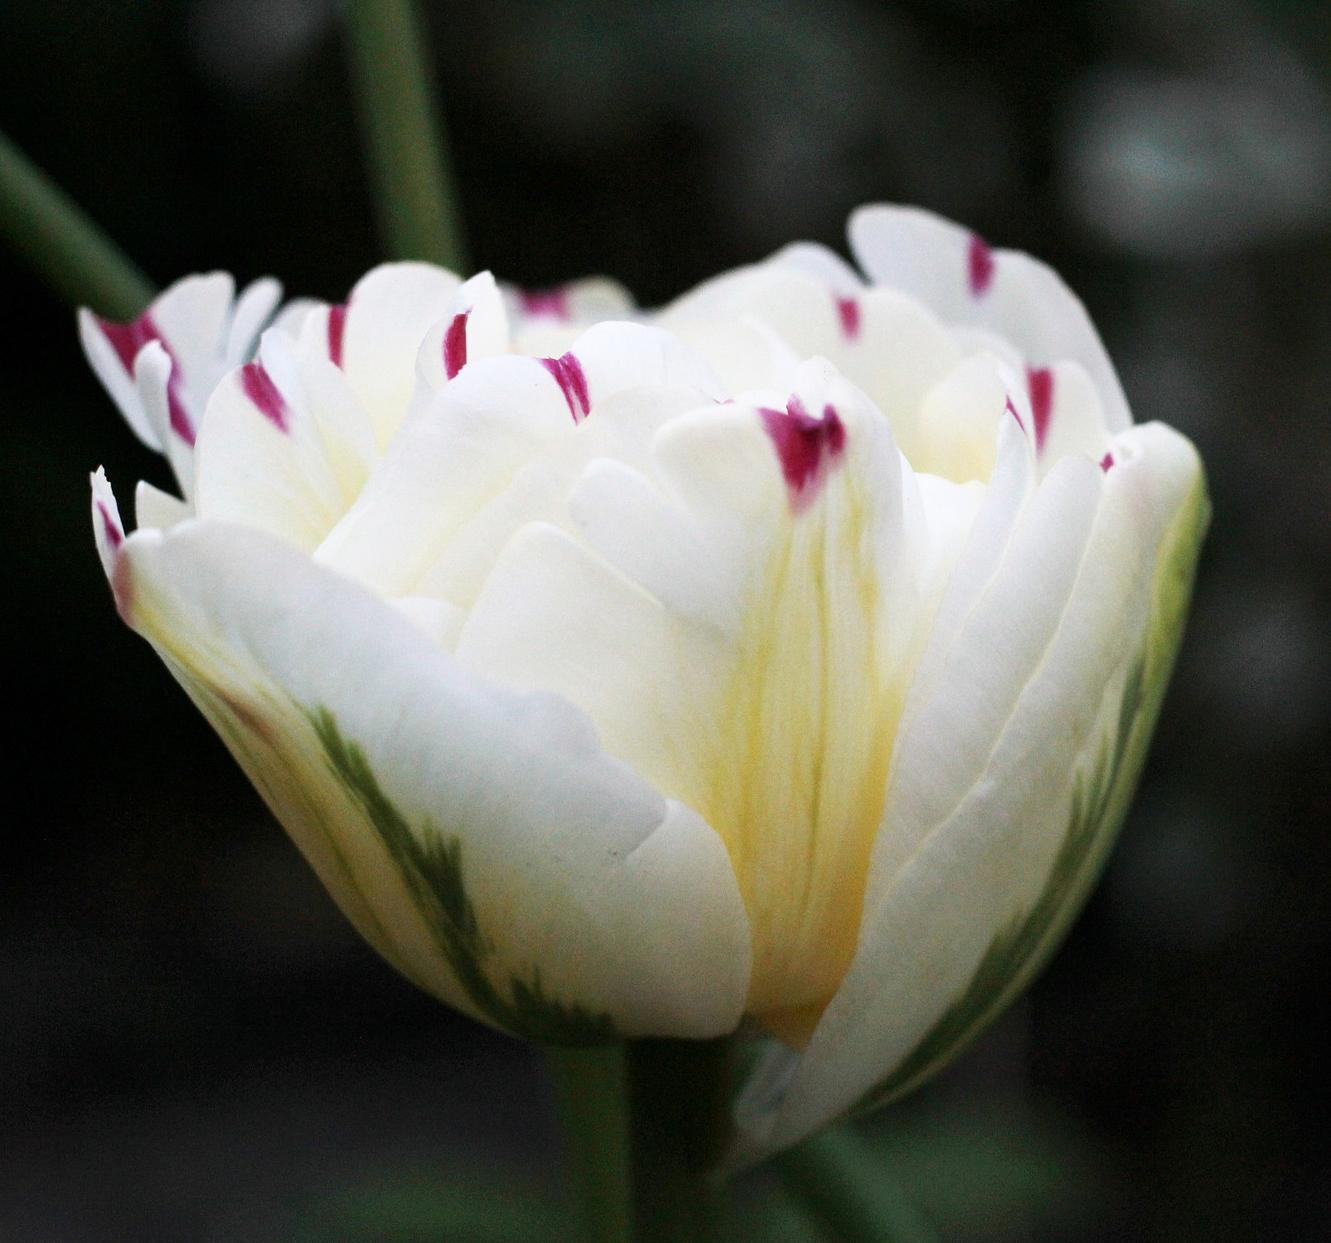 Tulip Double Late 'Danceline' - Tulip from Leo Berbee Bulb Company